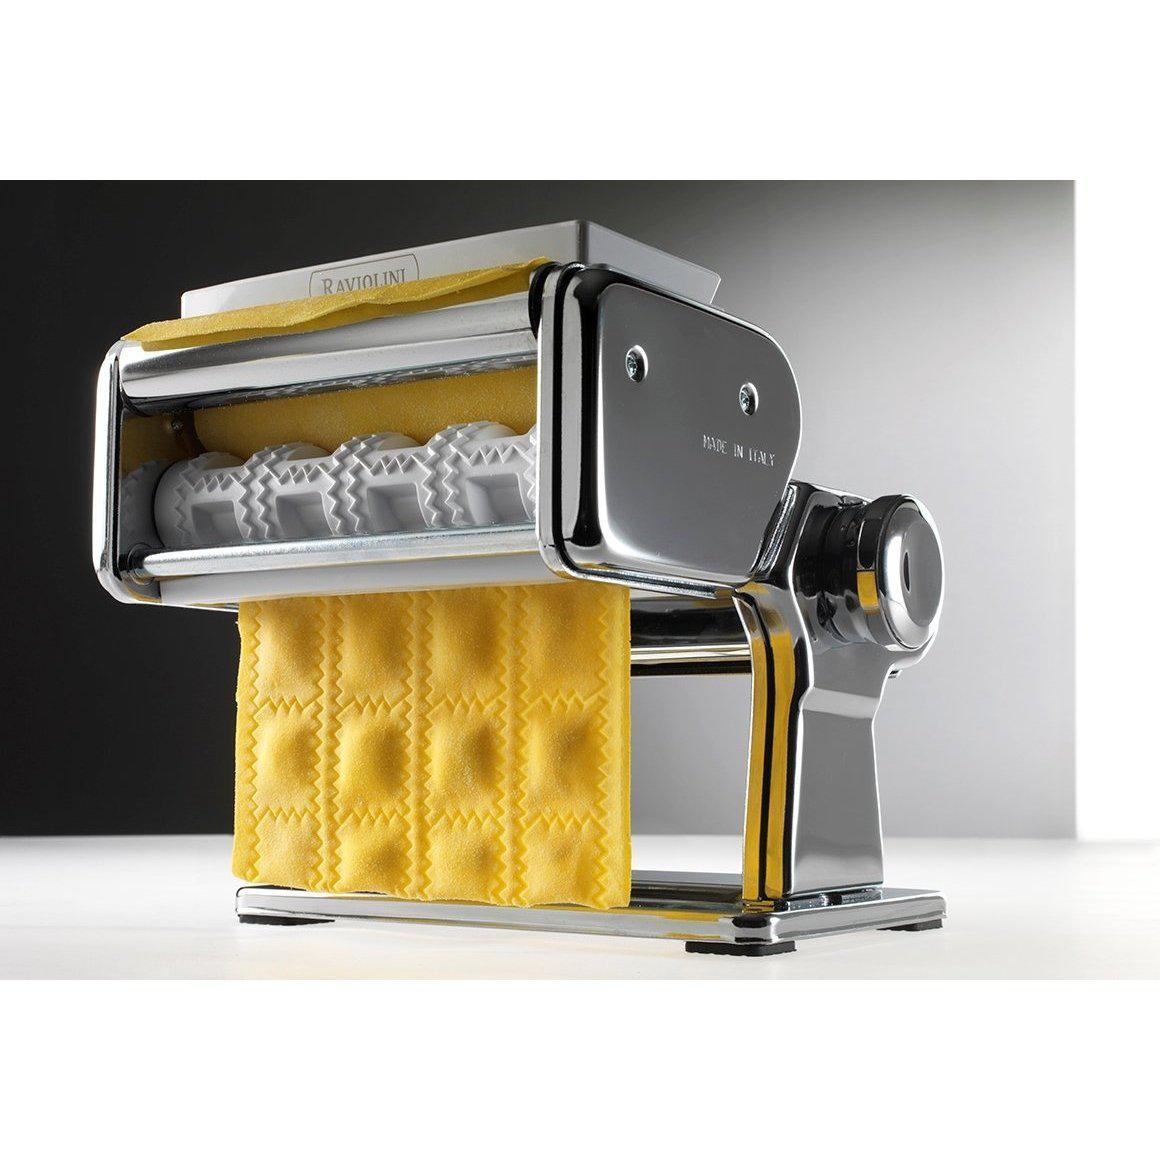 Marcato Atlas 150 Manual Pasta Machine